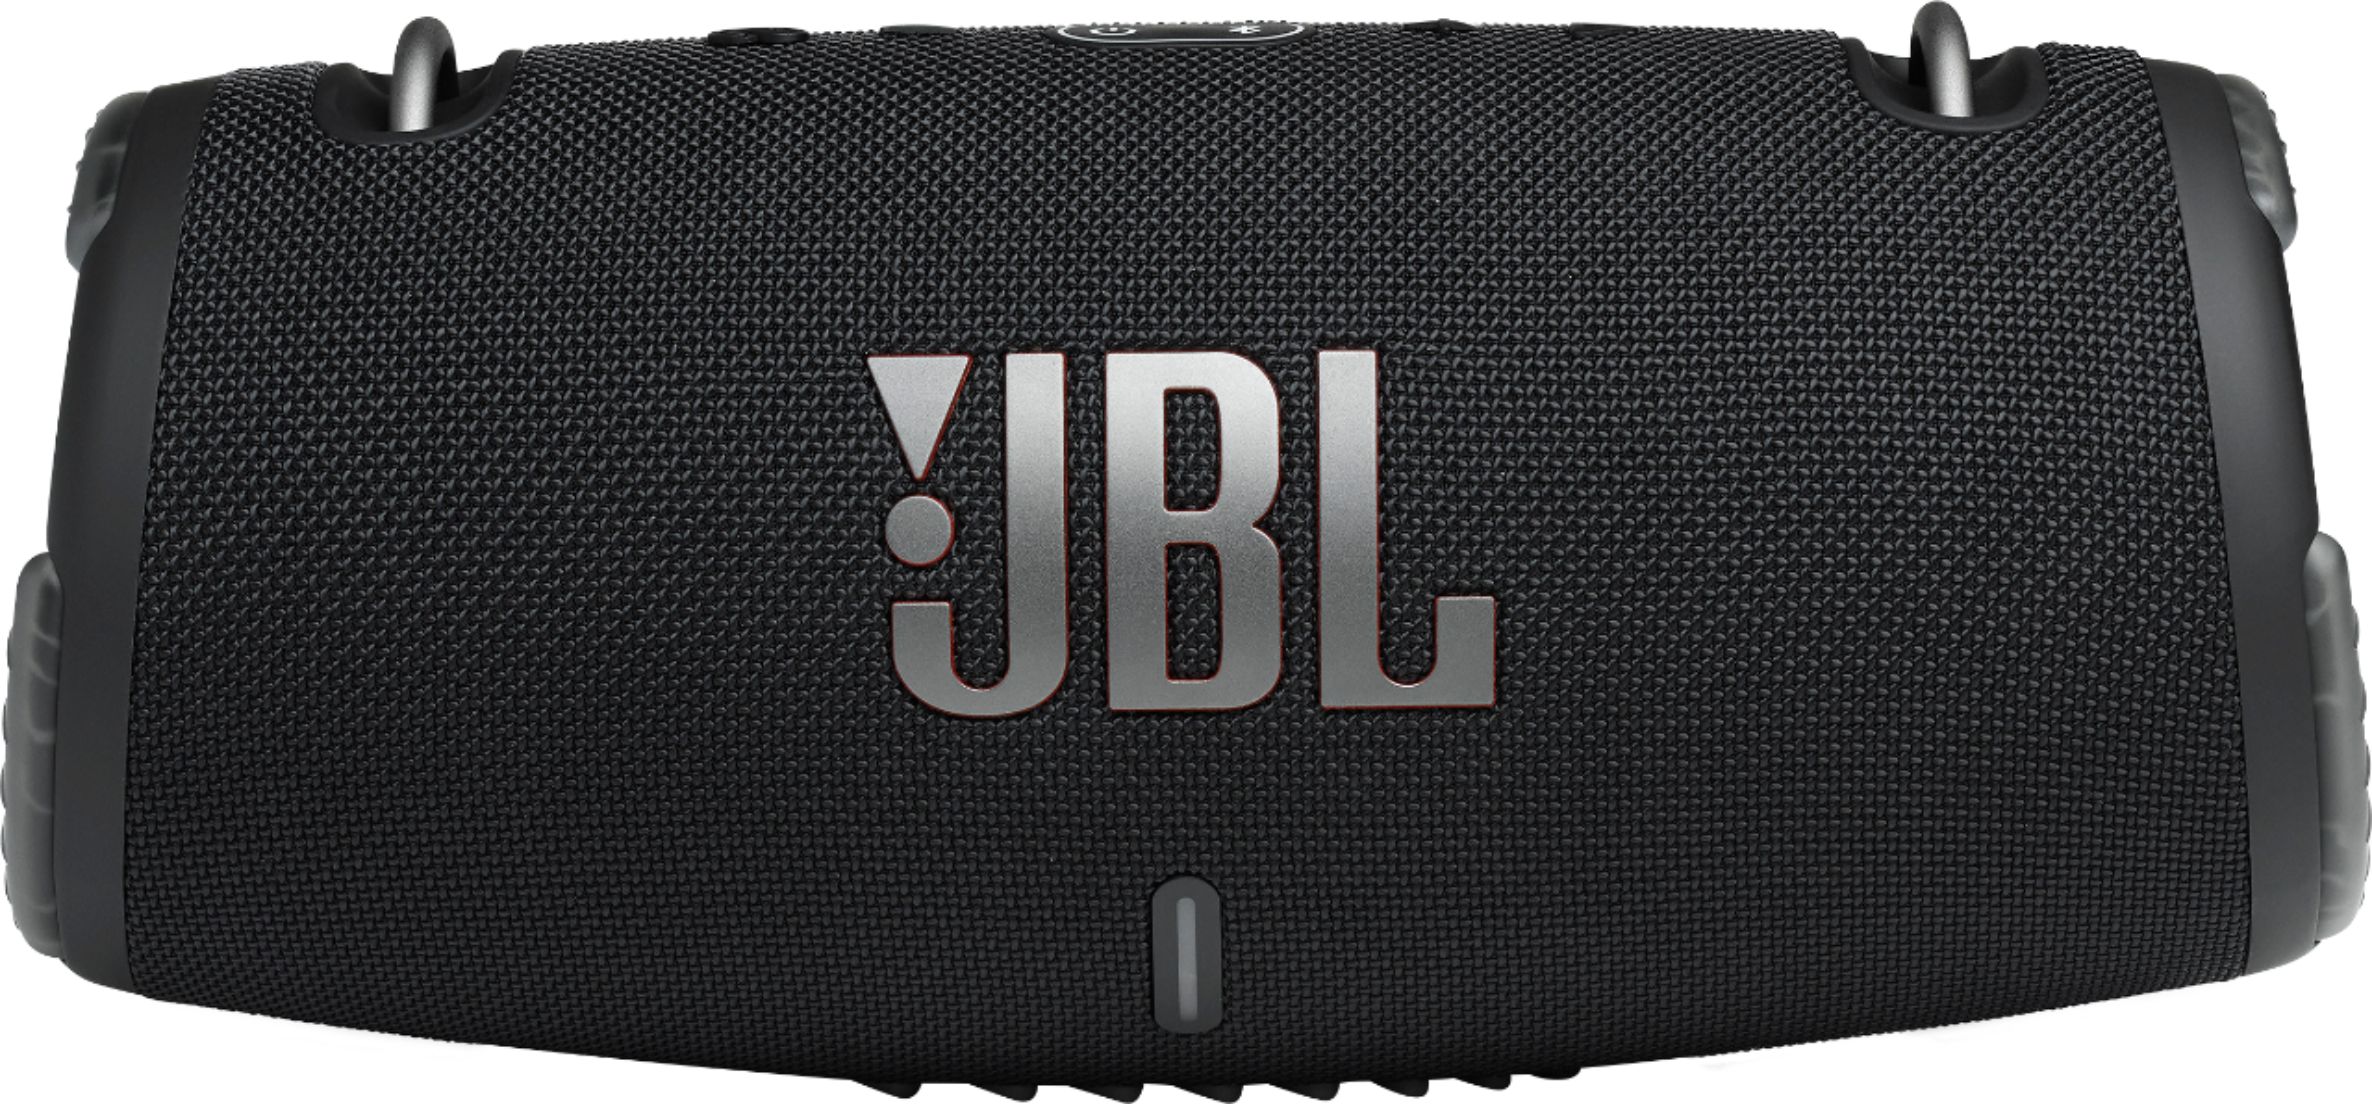 JBL - XTREME3 Portable Bluetooth Speaker - Black $179.99